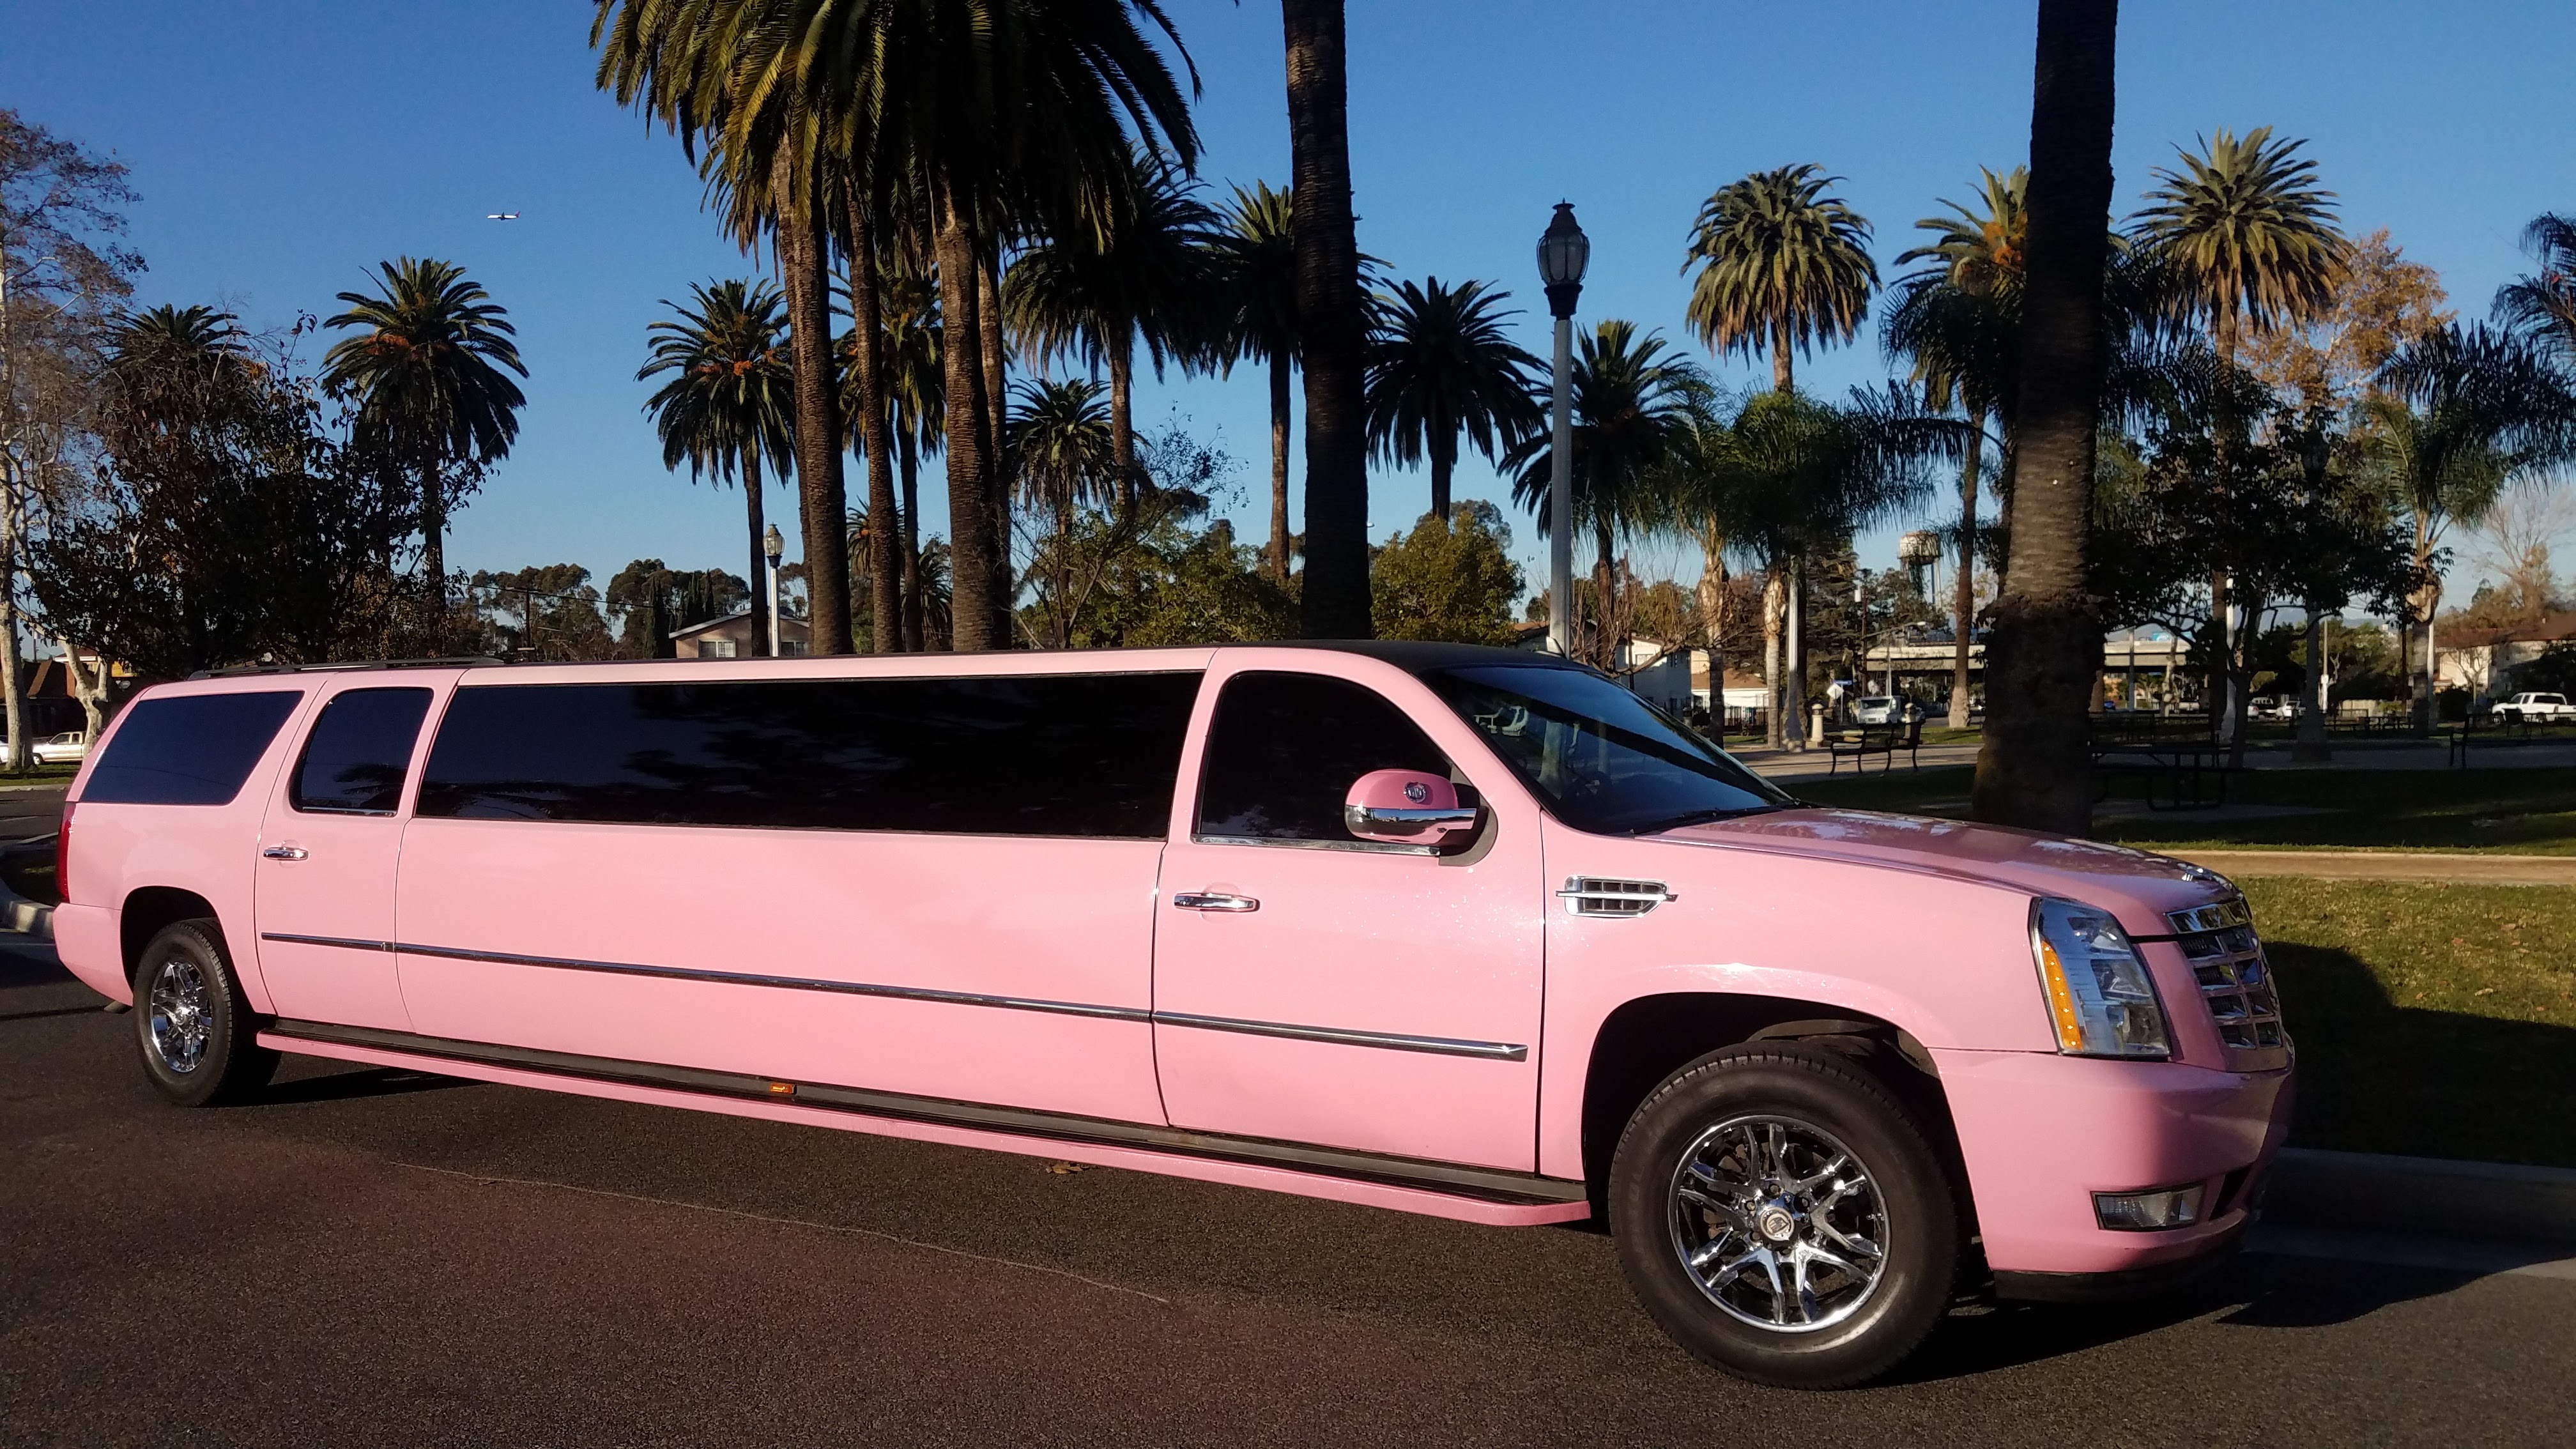 2007 Pink 140 GMC Yukon XL limousine for sale #1438